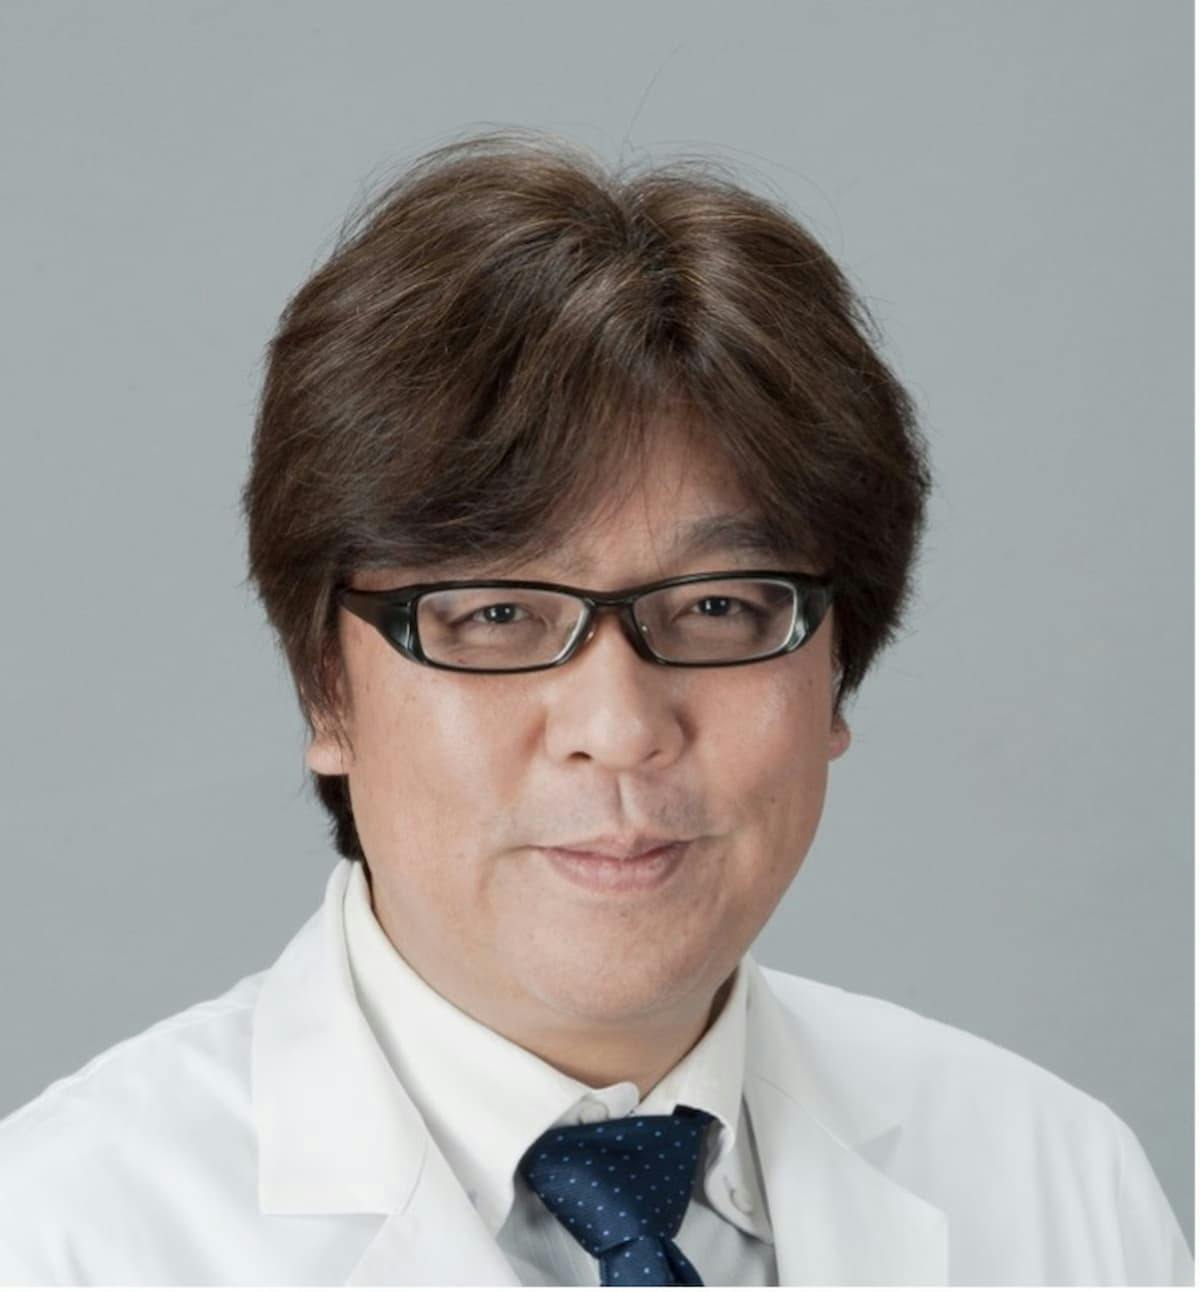 Takayuki Yoshino, MD, PhD
Director, Department of Gastroenterology and Gastrointestinal Oncology
Deputy Director, National Cancer Center Hospital East
Kashiwa, Japan